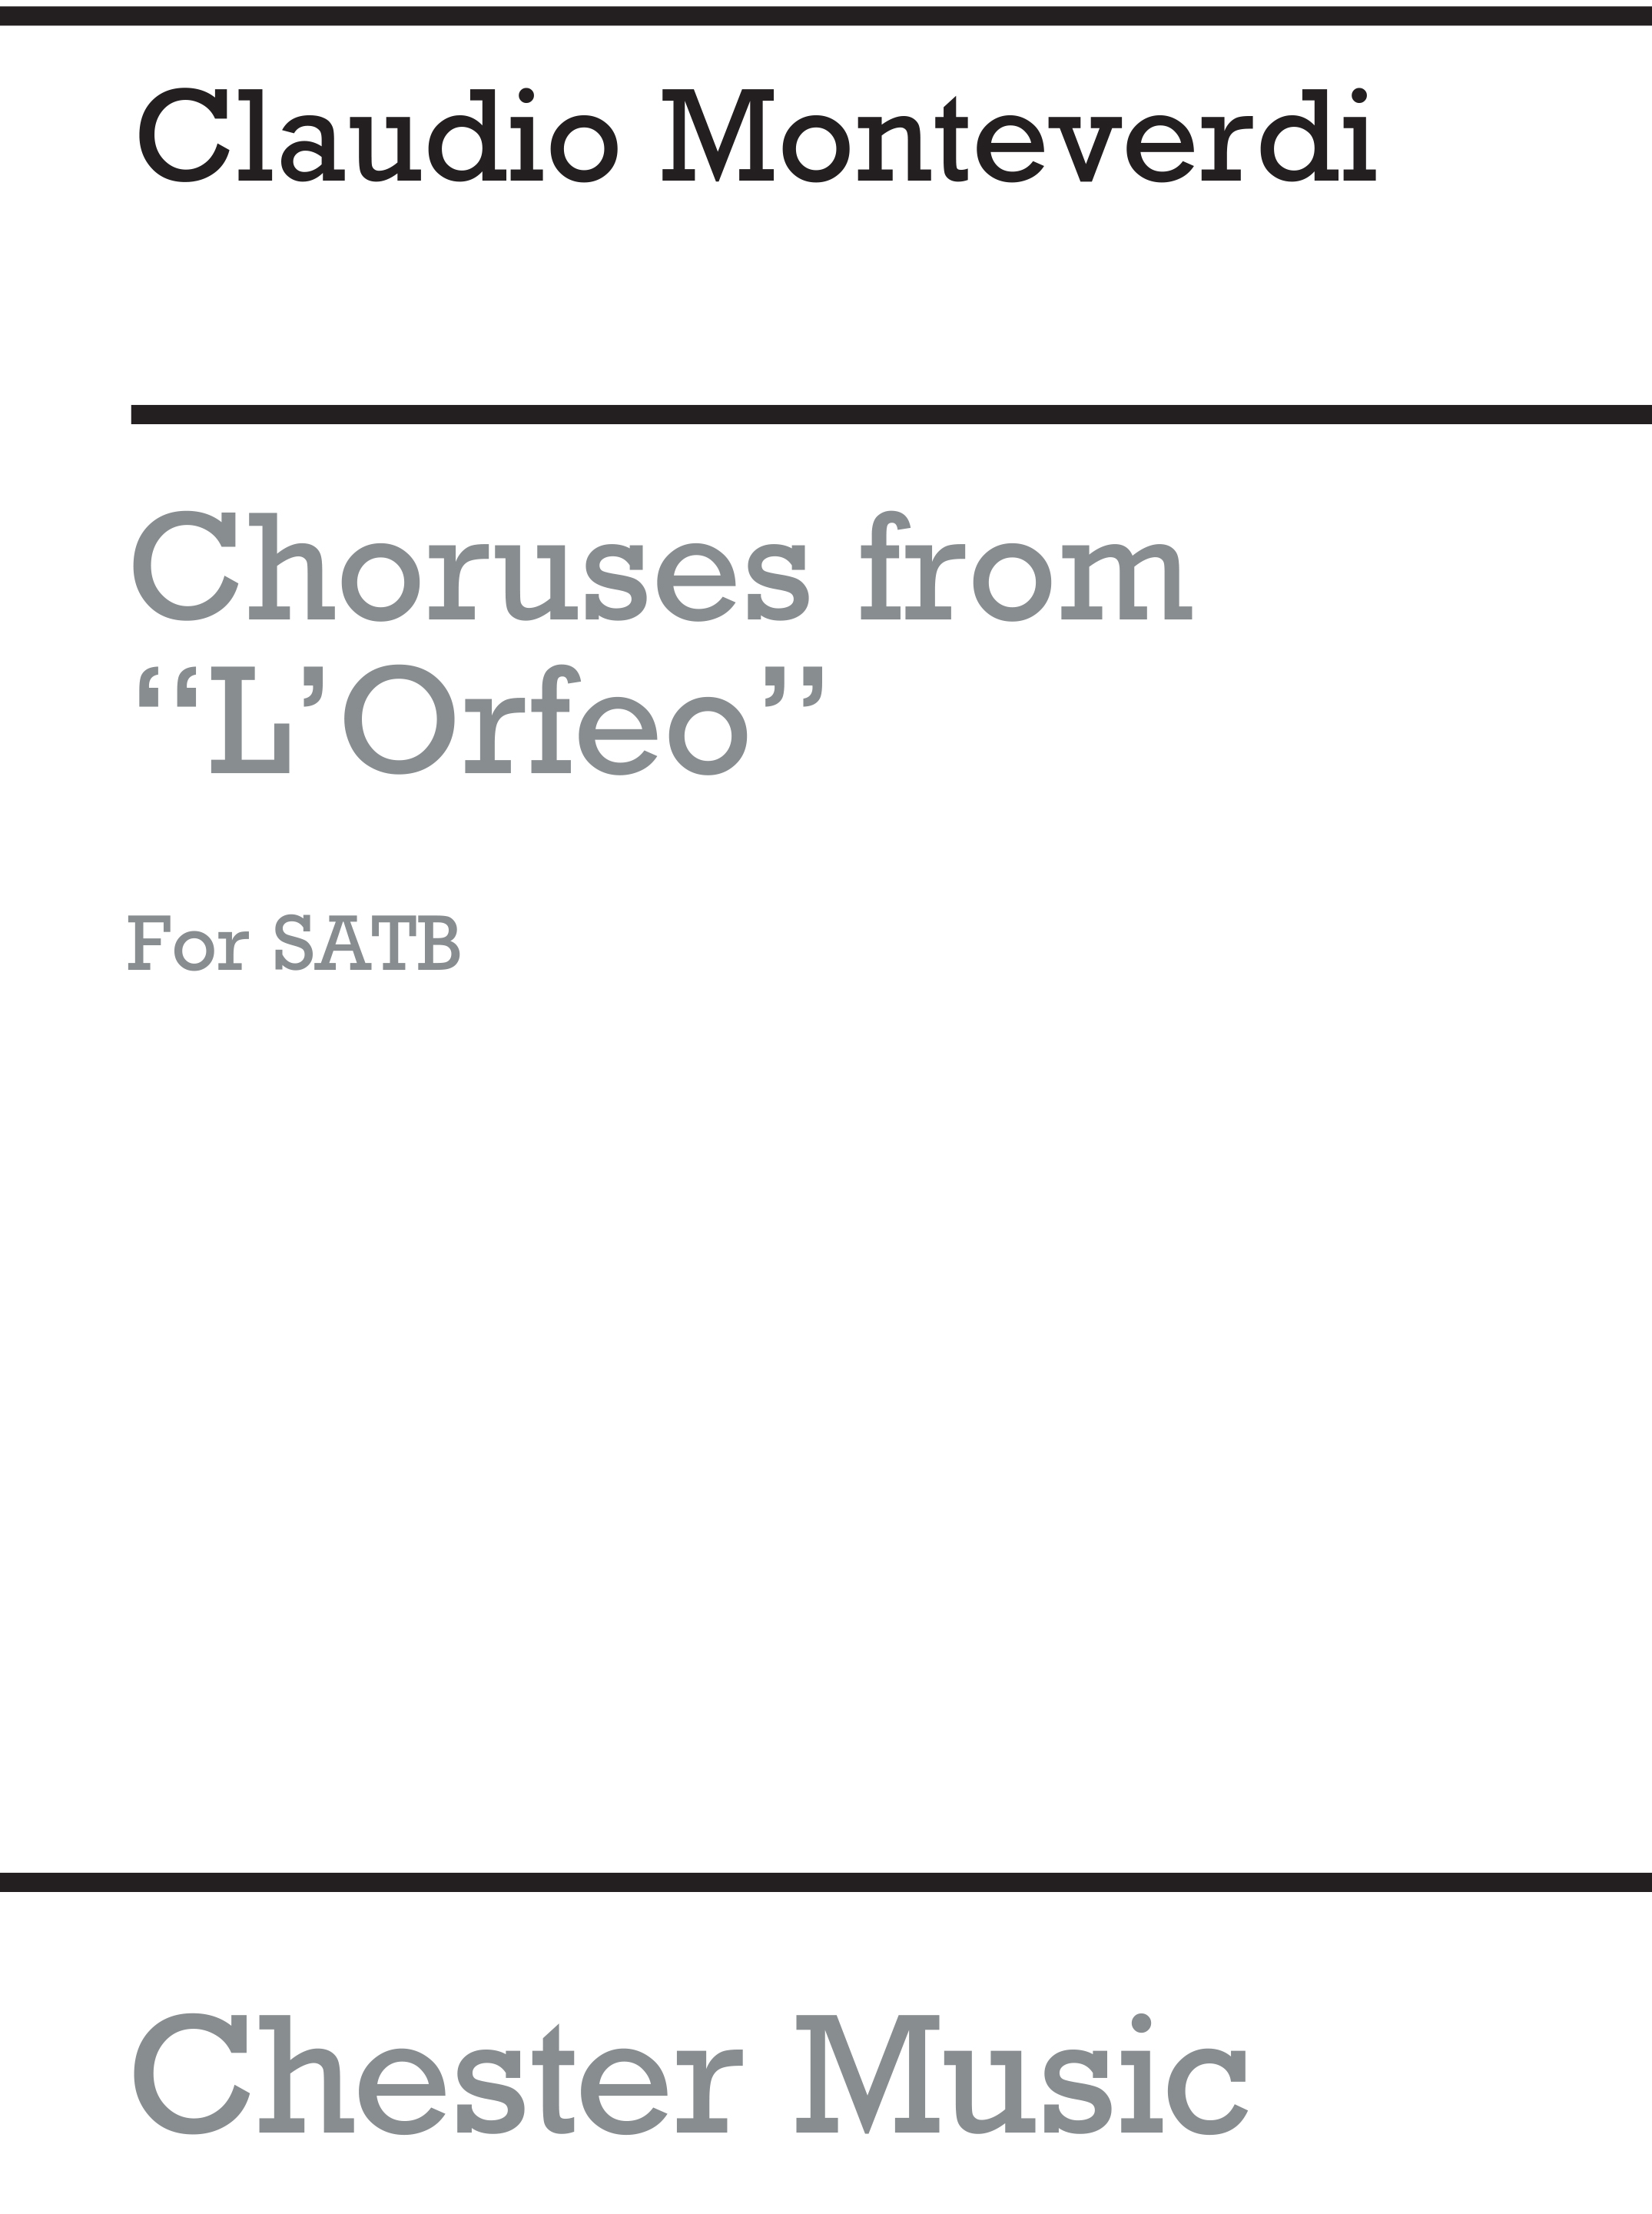 Claudio Monteverdi: Choruses From L'Orfeo (Malipiero) for SATB Chorus: SATB: